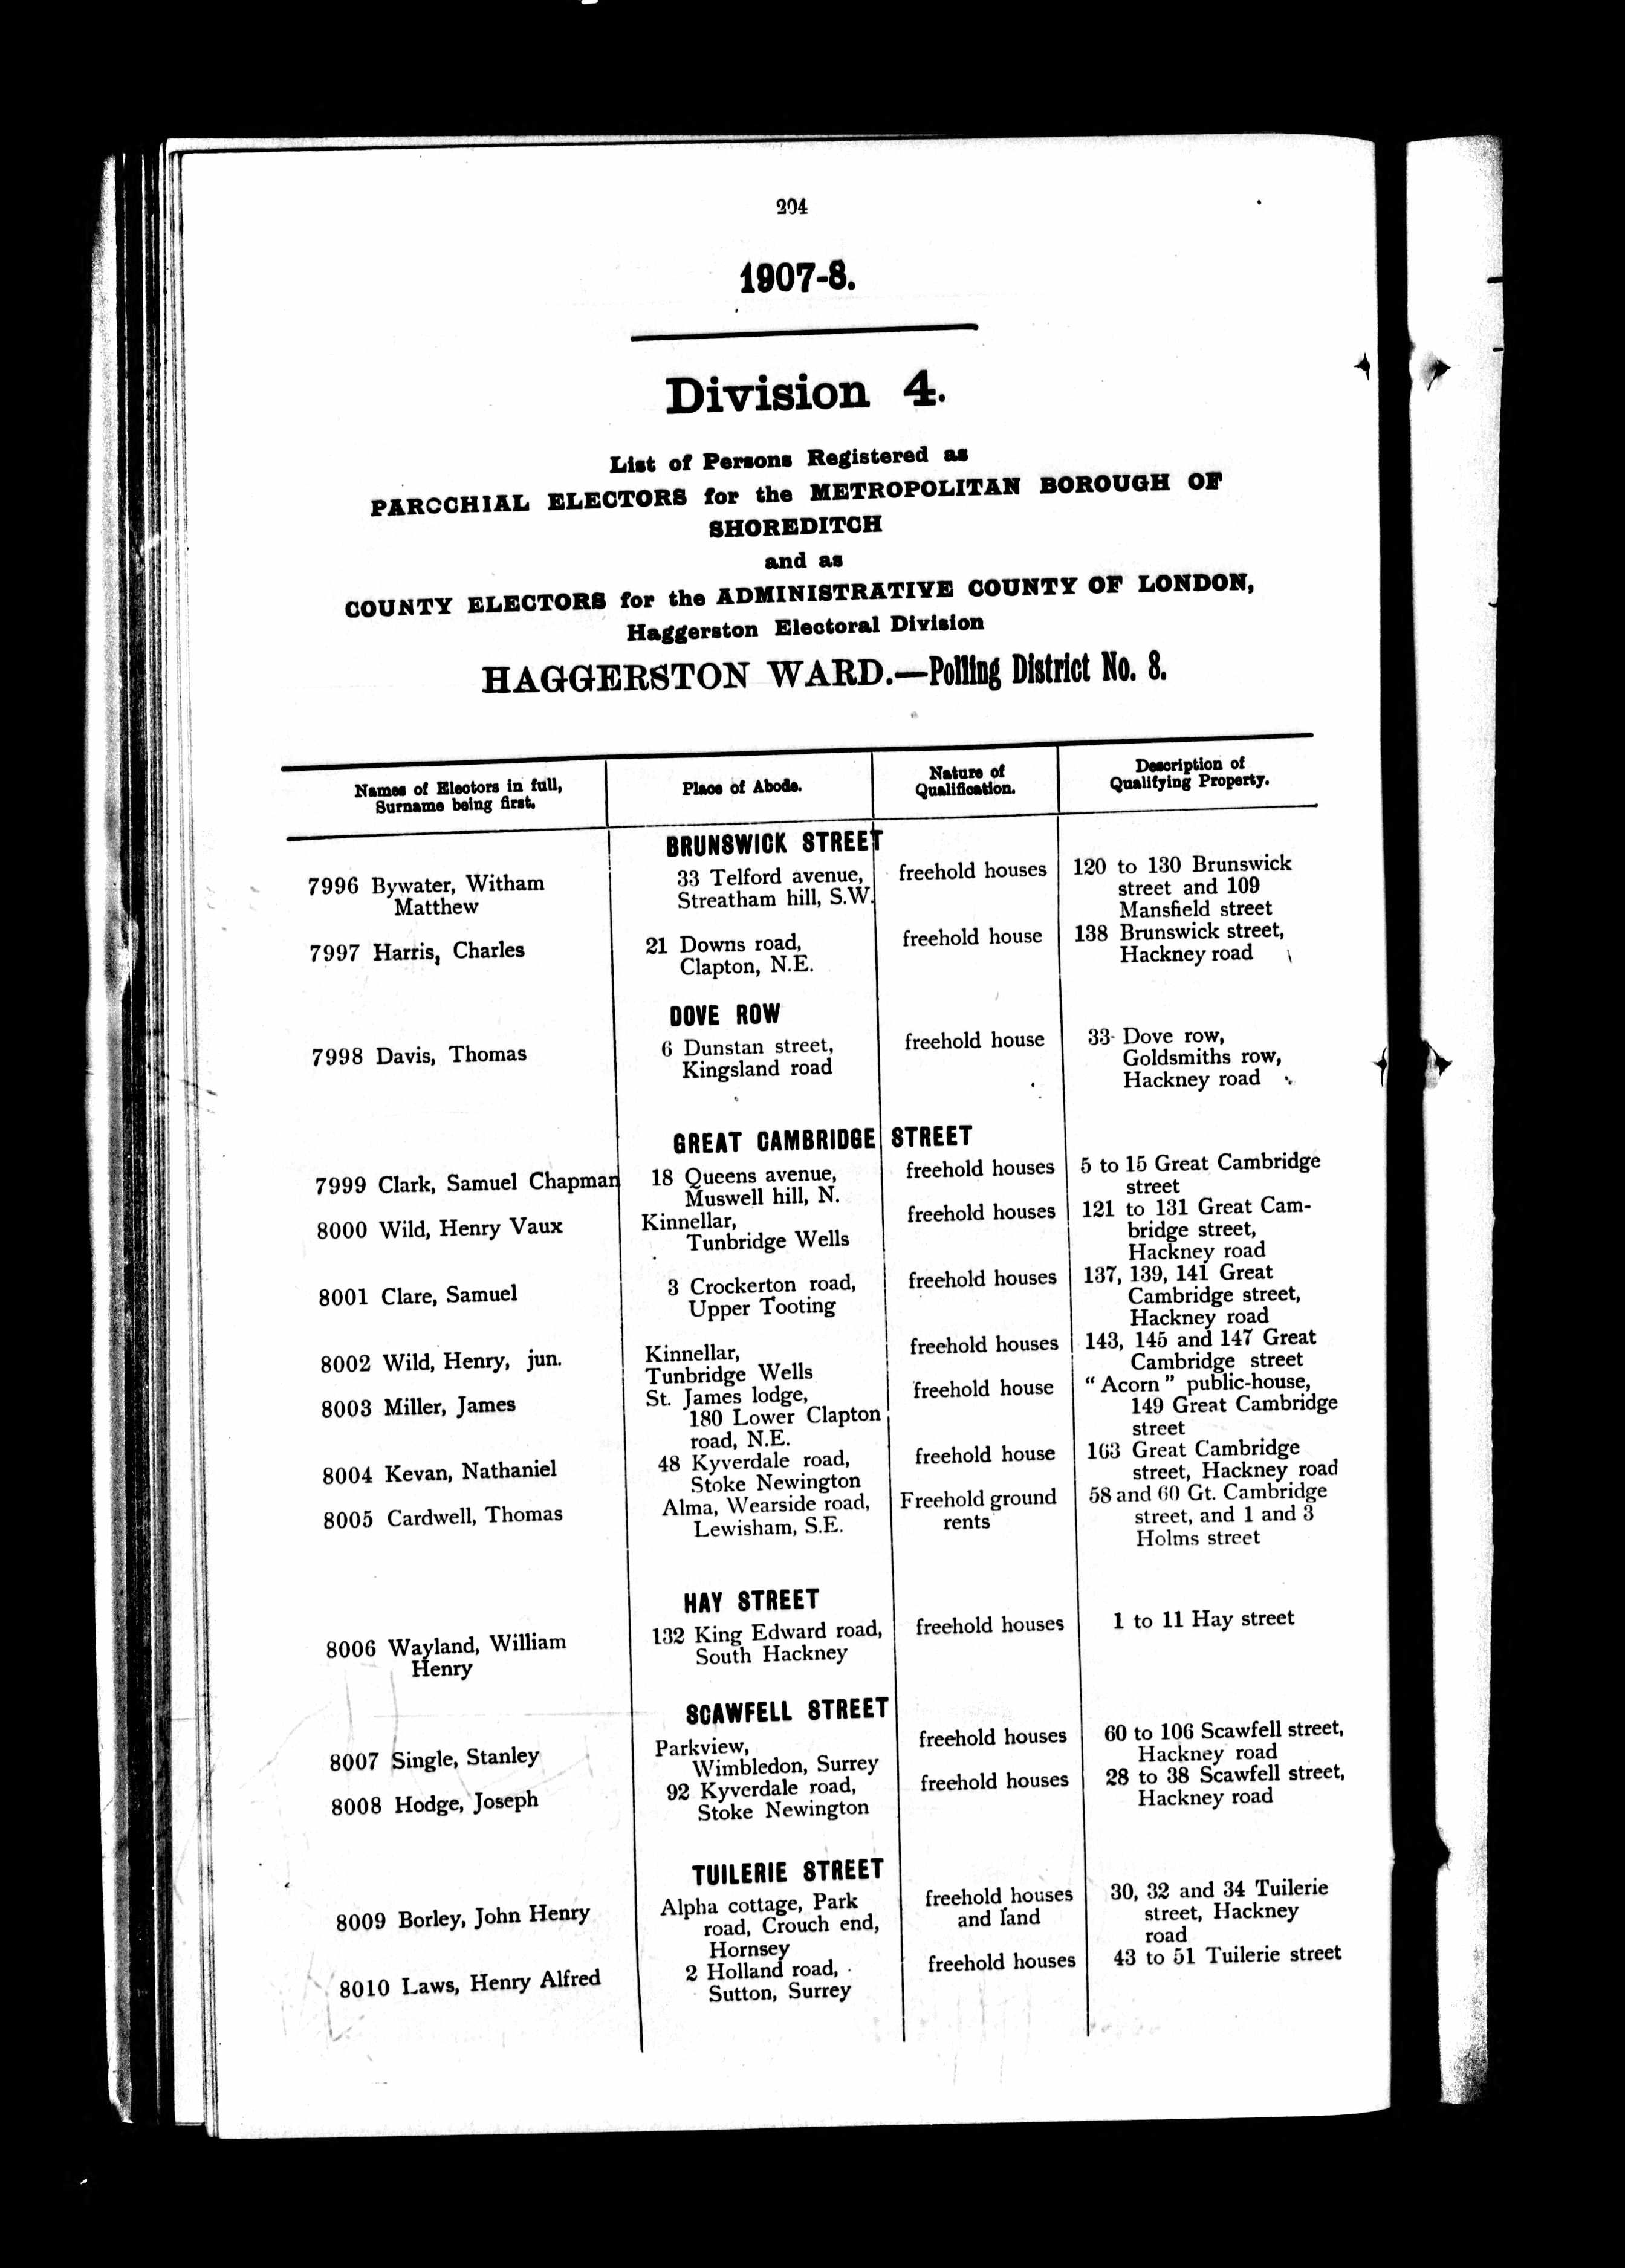 Nathaniel Kevan held property in Great Cambridge Street - 1908 electoral register